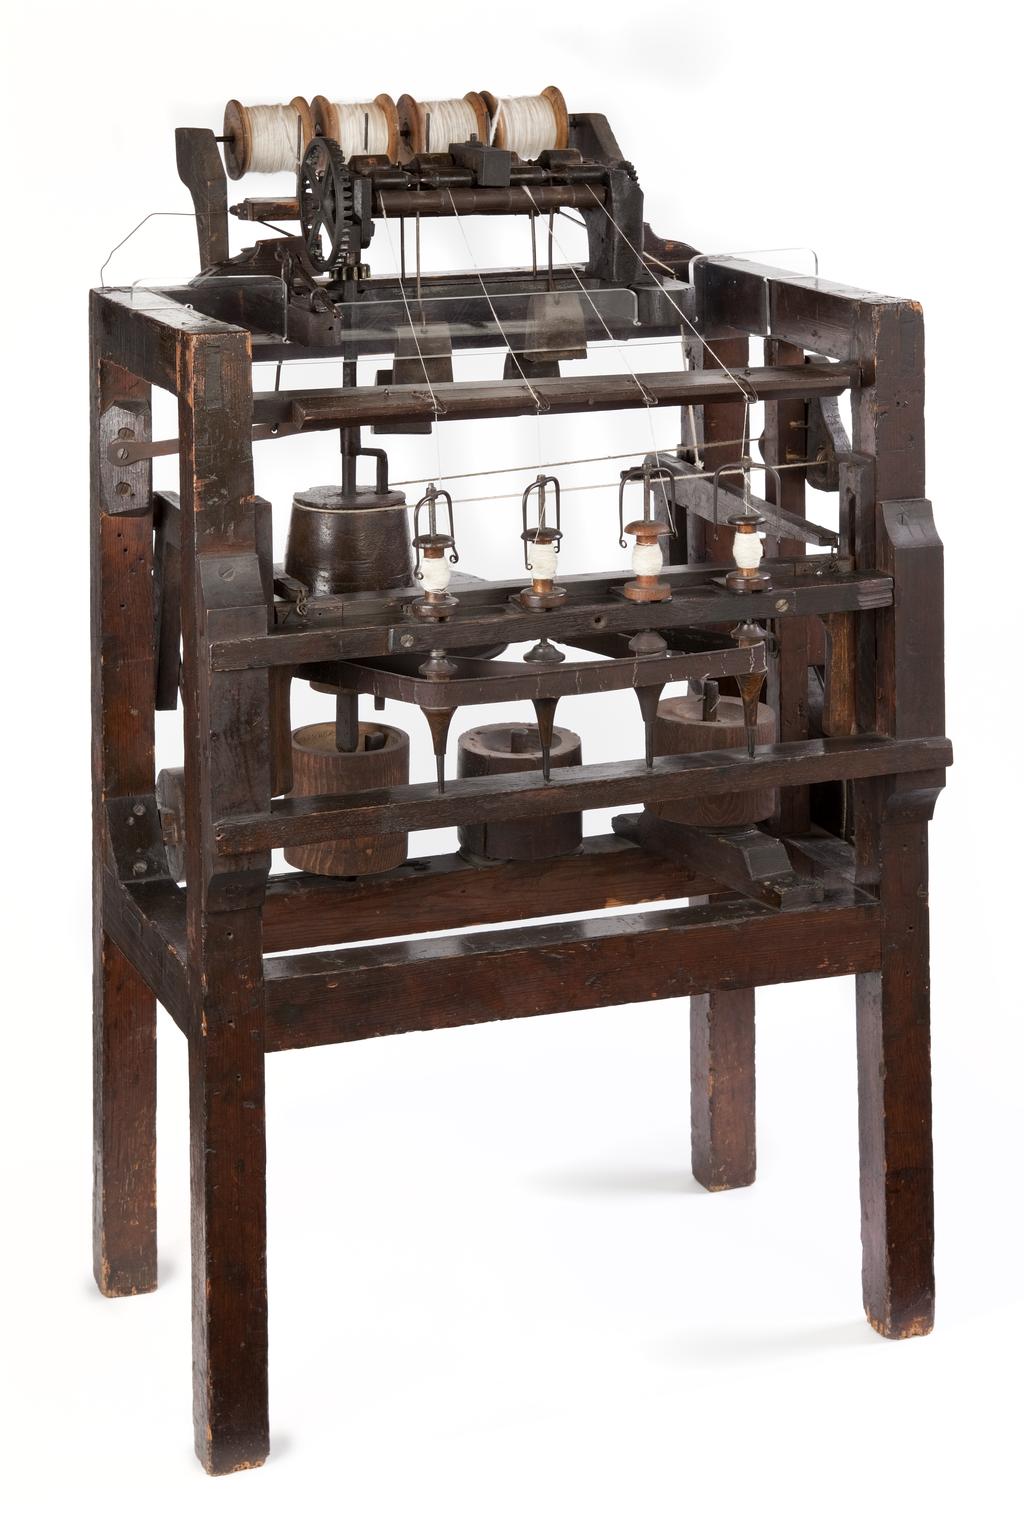 An 18th century wooden cotton weaving machine